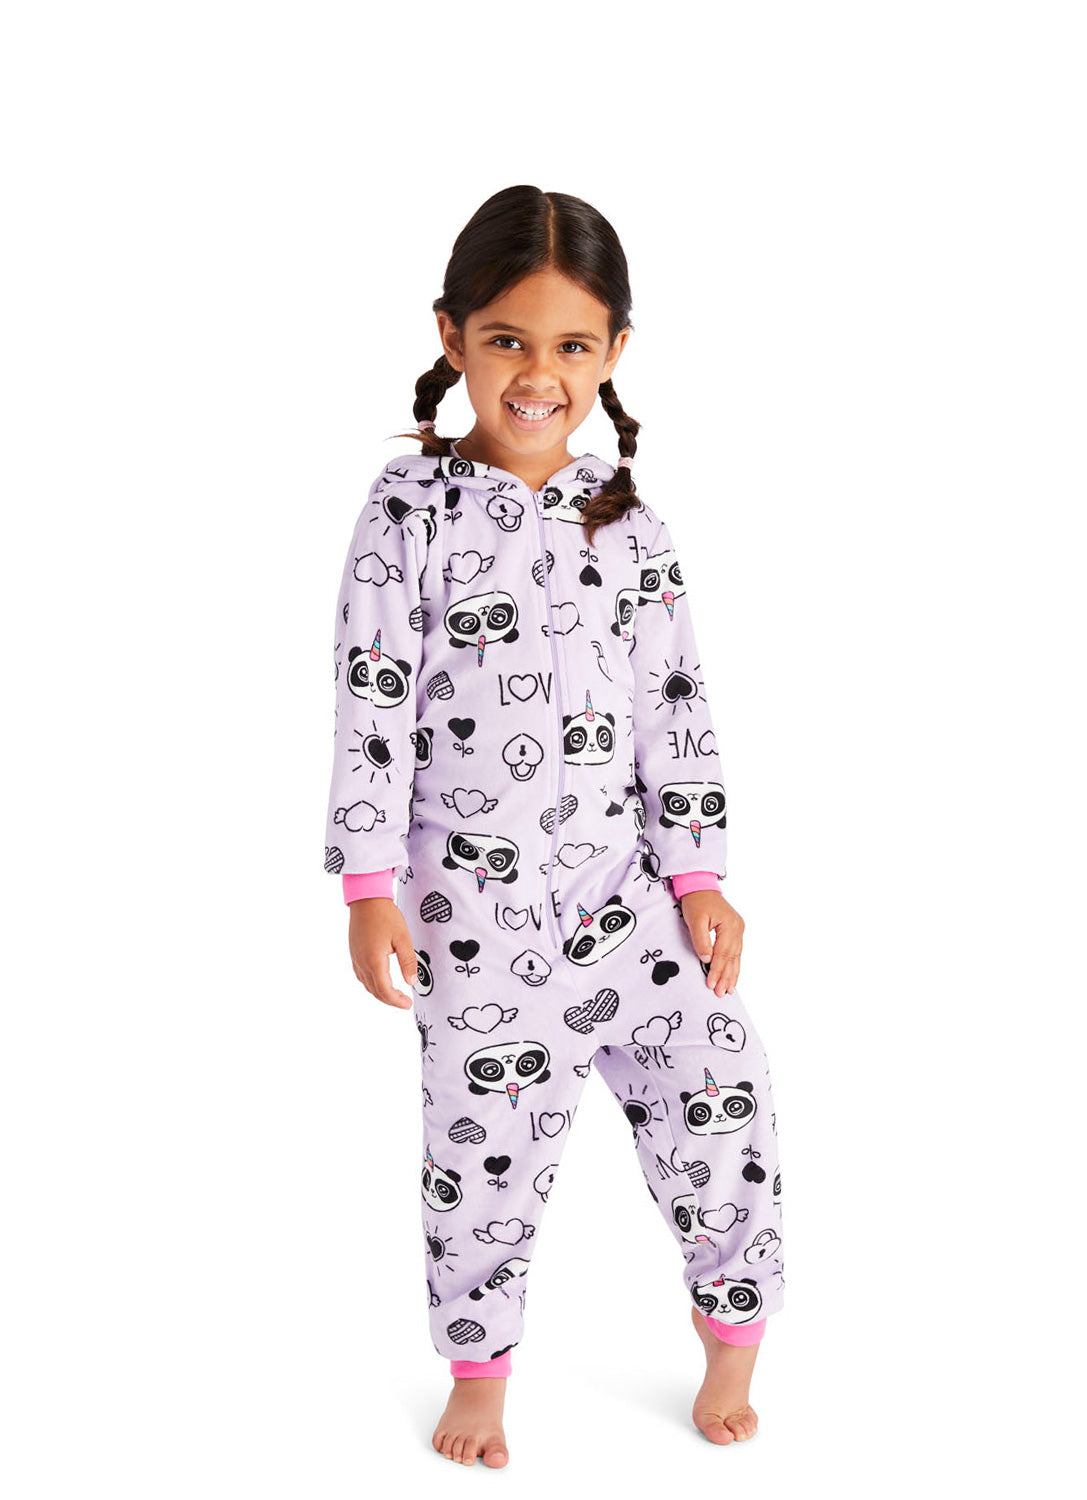 Little girl wearing a Panda Print Onesie in lavender colour